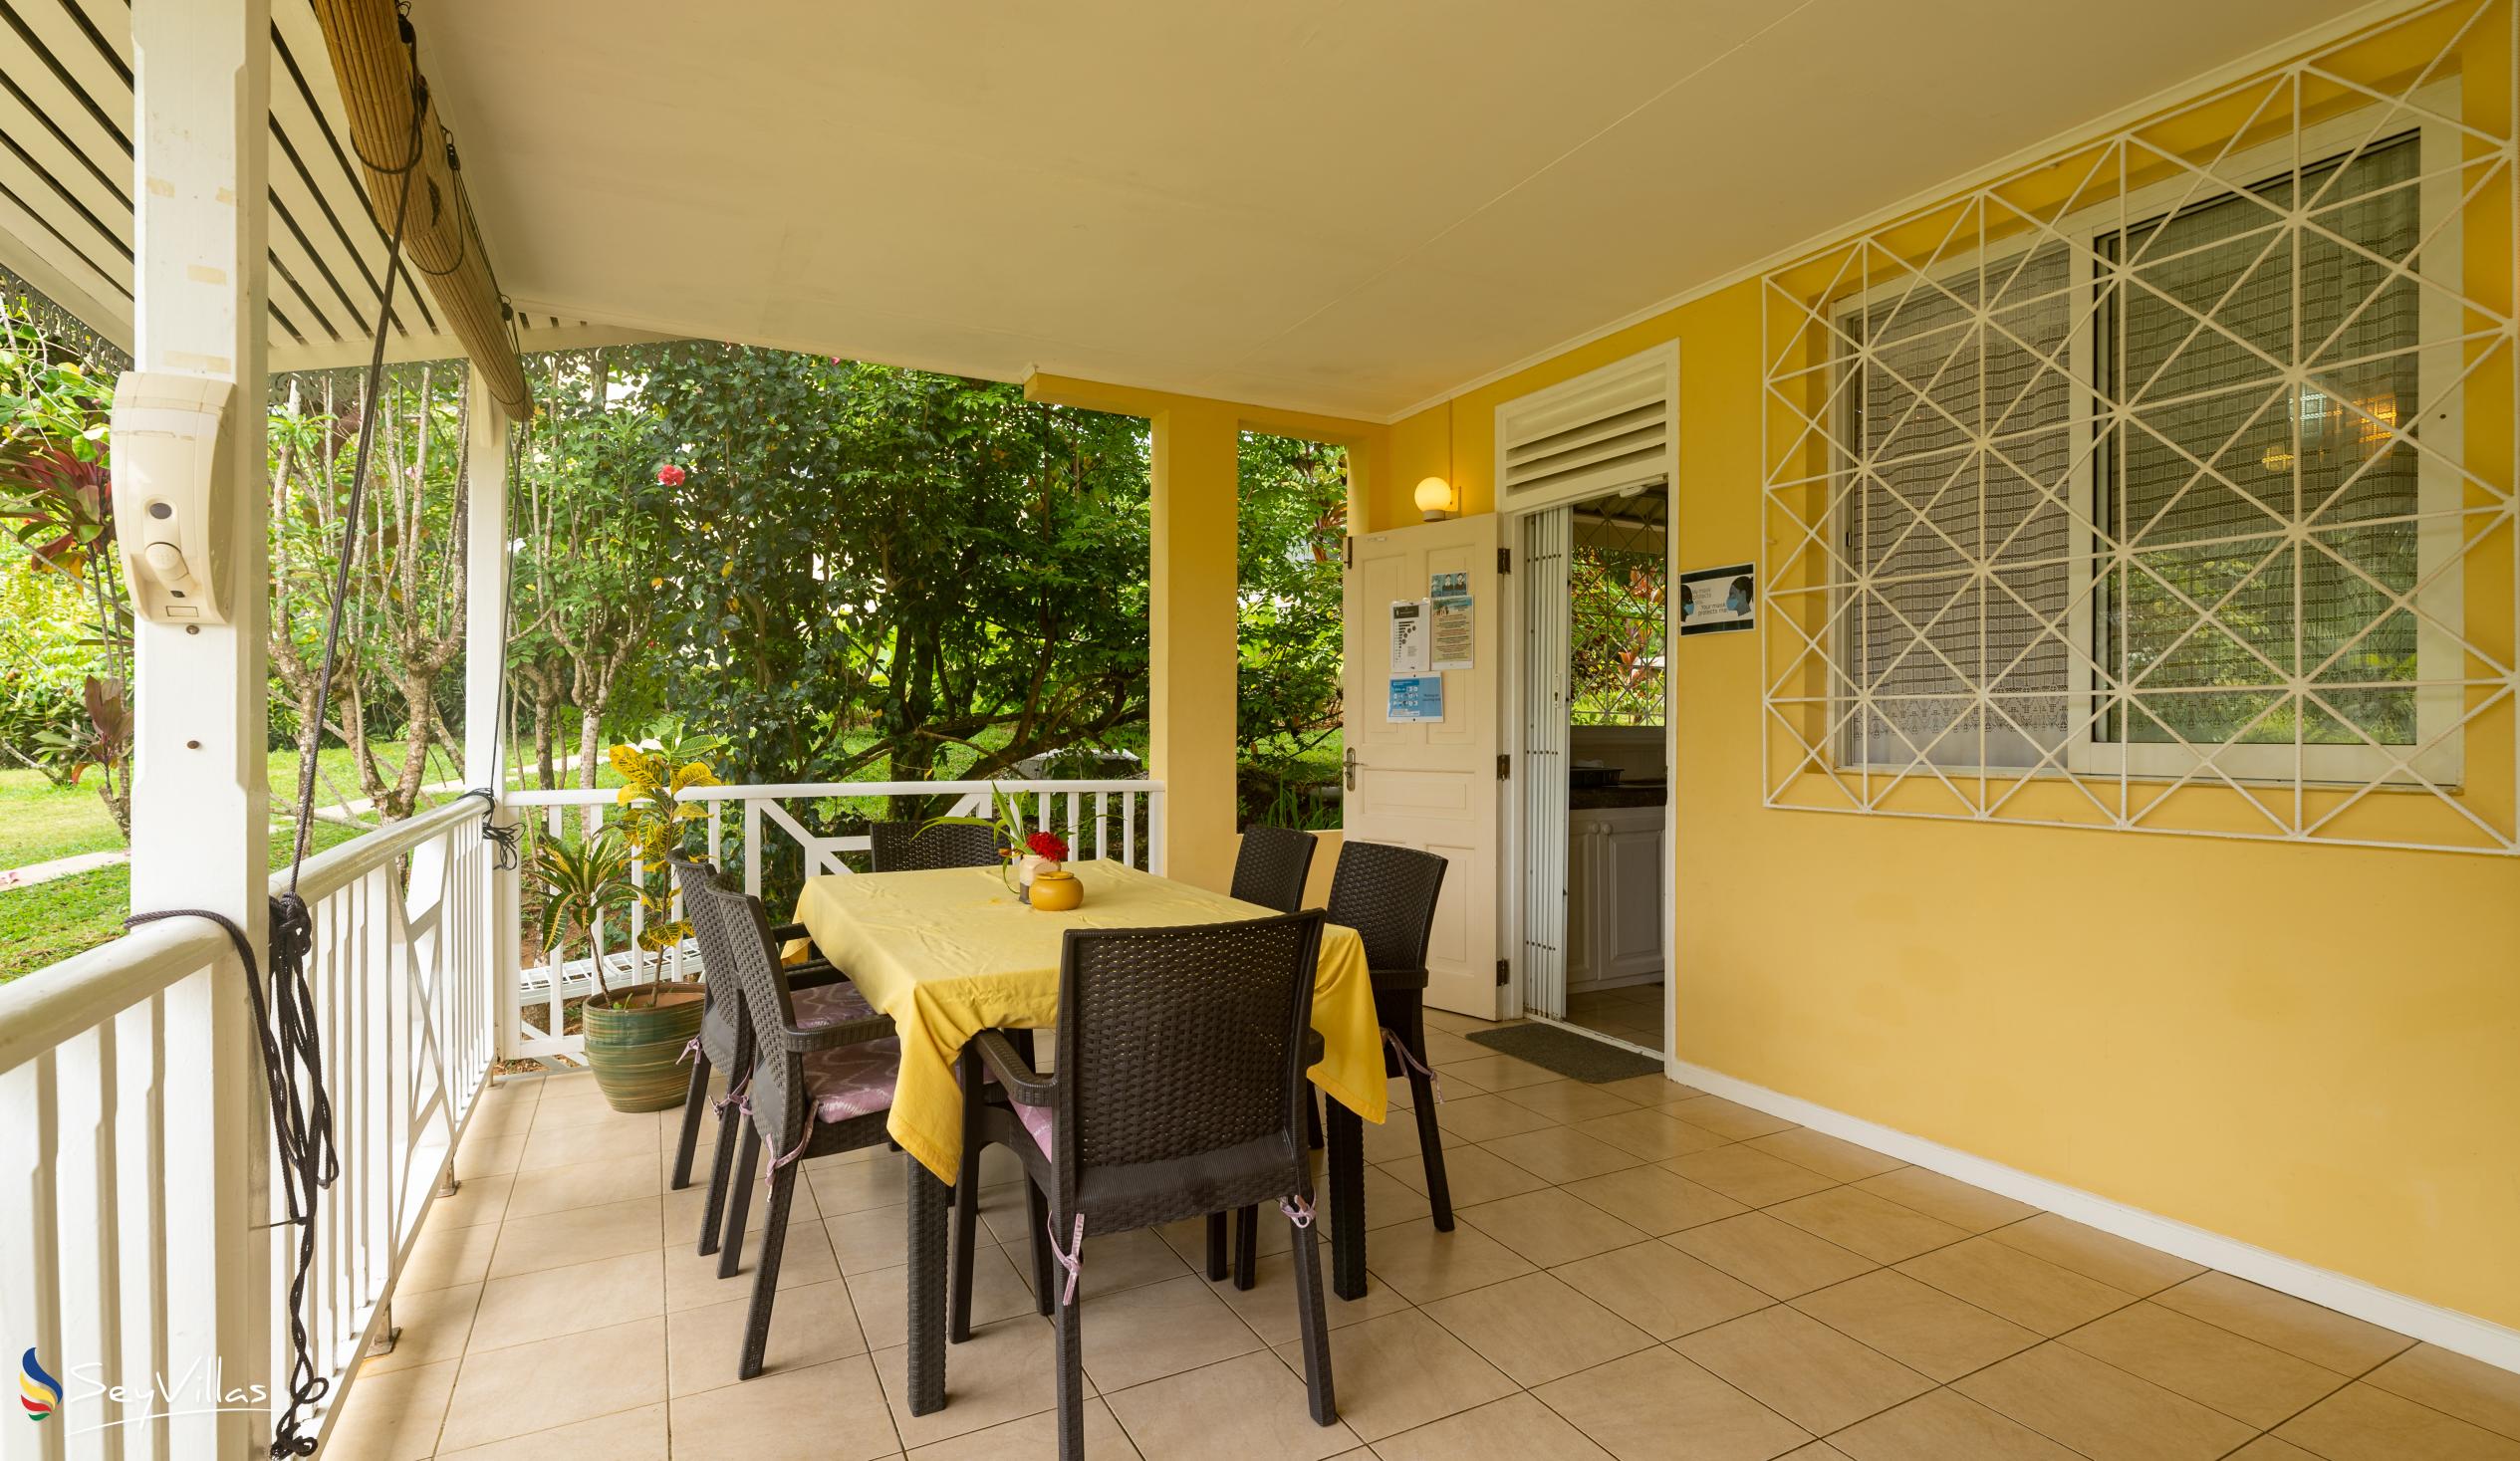 Photo 84: Residence Monte Cristo - 3-Bedroom Duplex - Mahé (Seychelles)